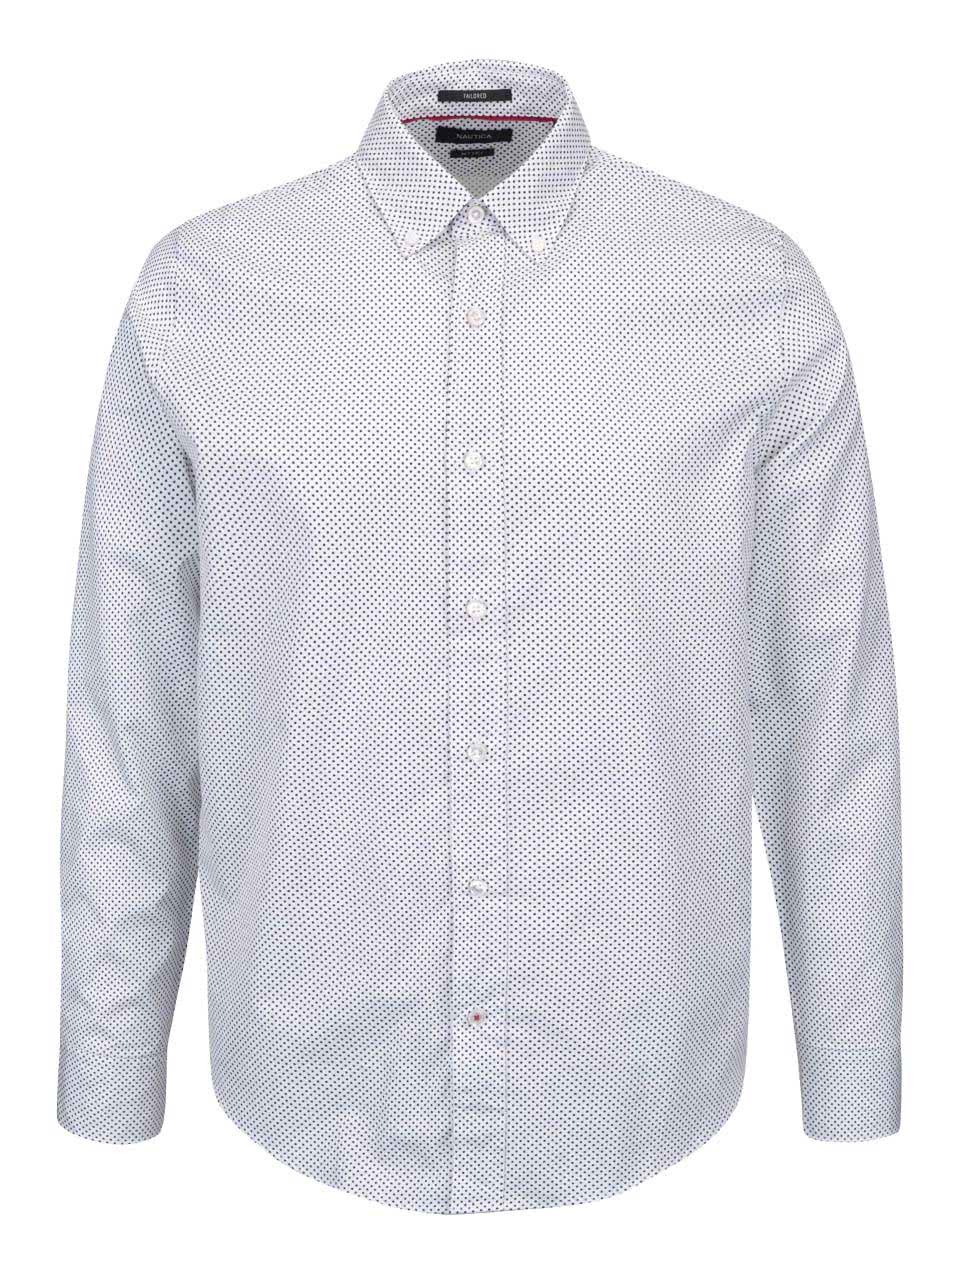 Bílá pánská košile s puntíky Nautica